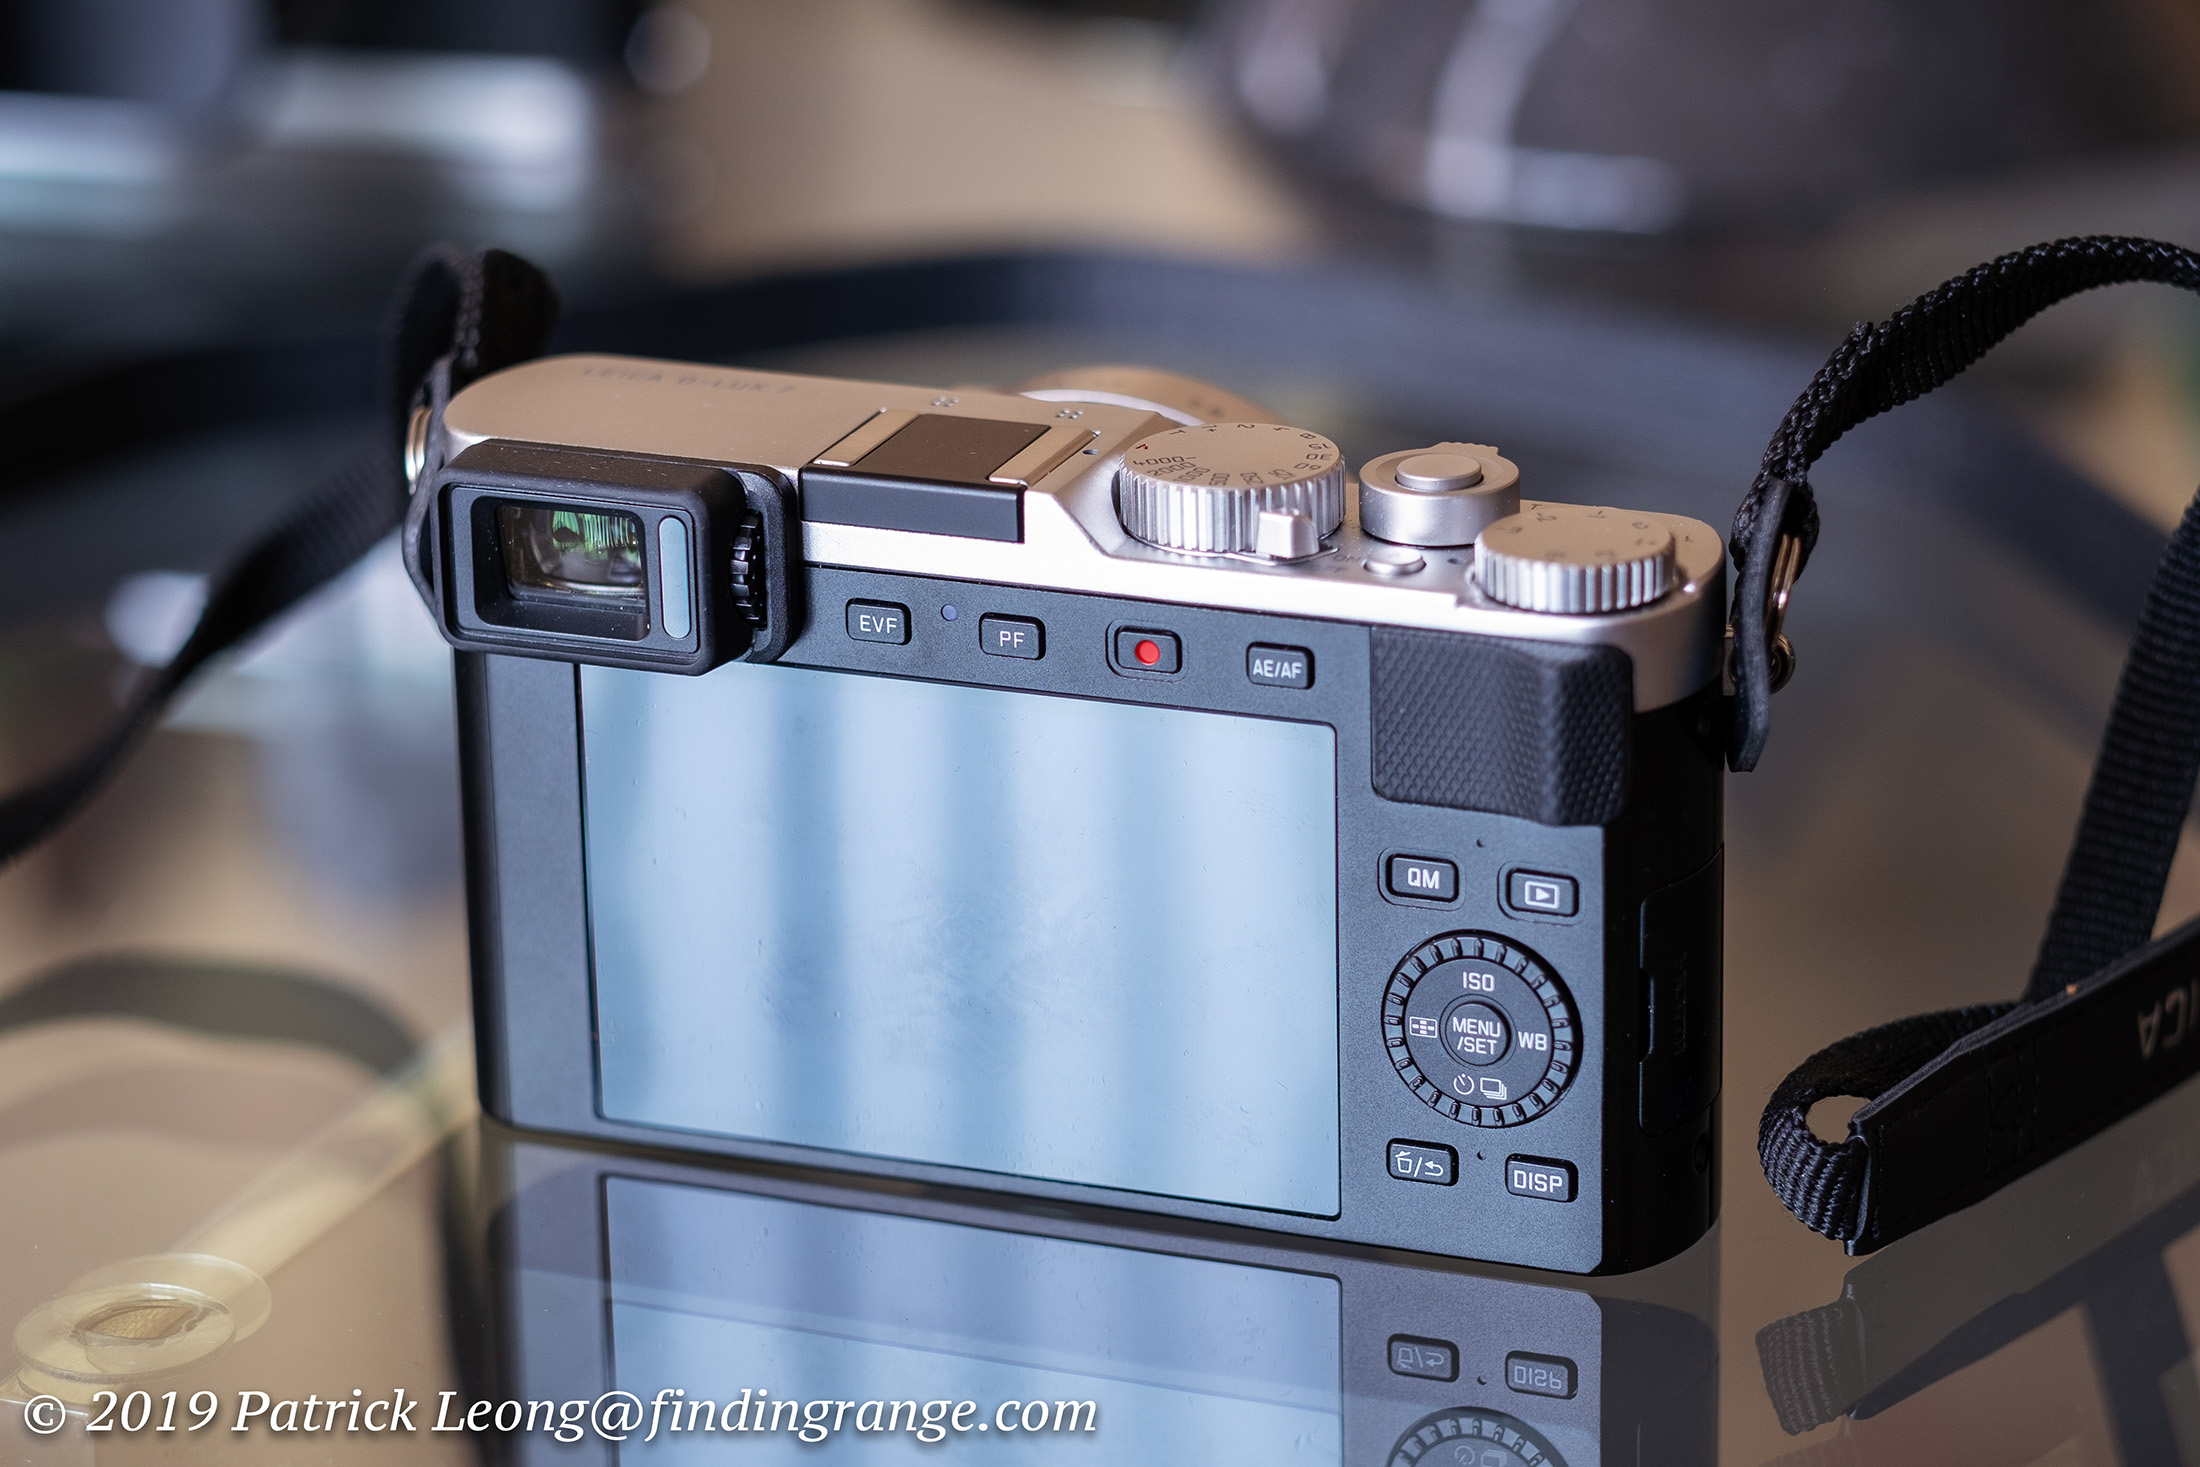 Leica D-Lux 7 Camera - LEICA REVIEW